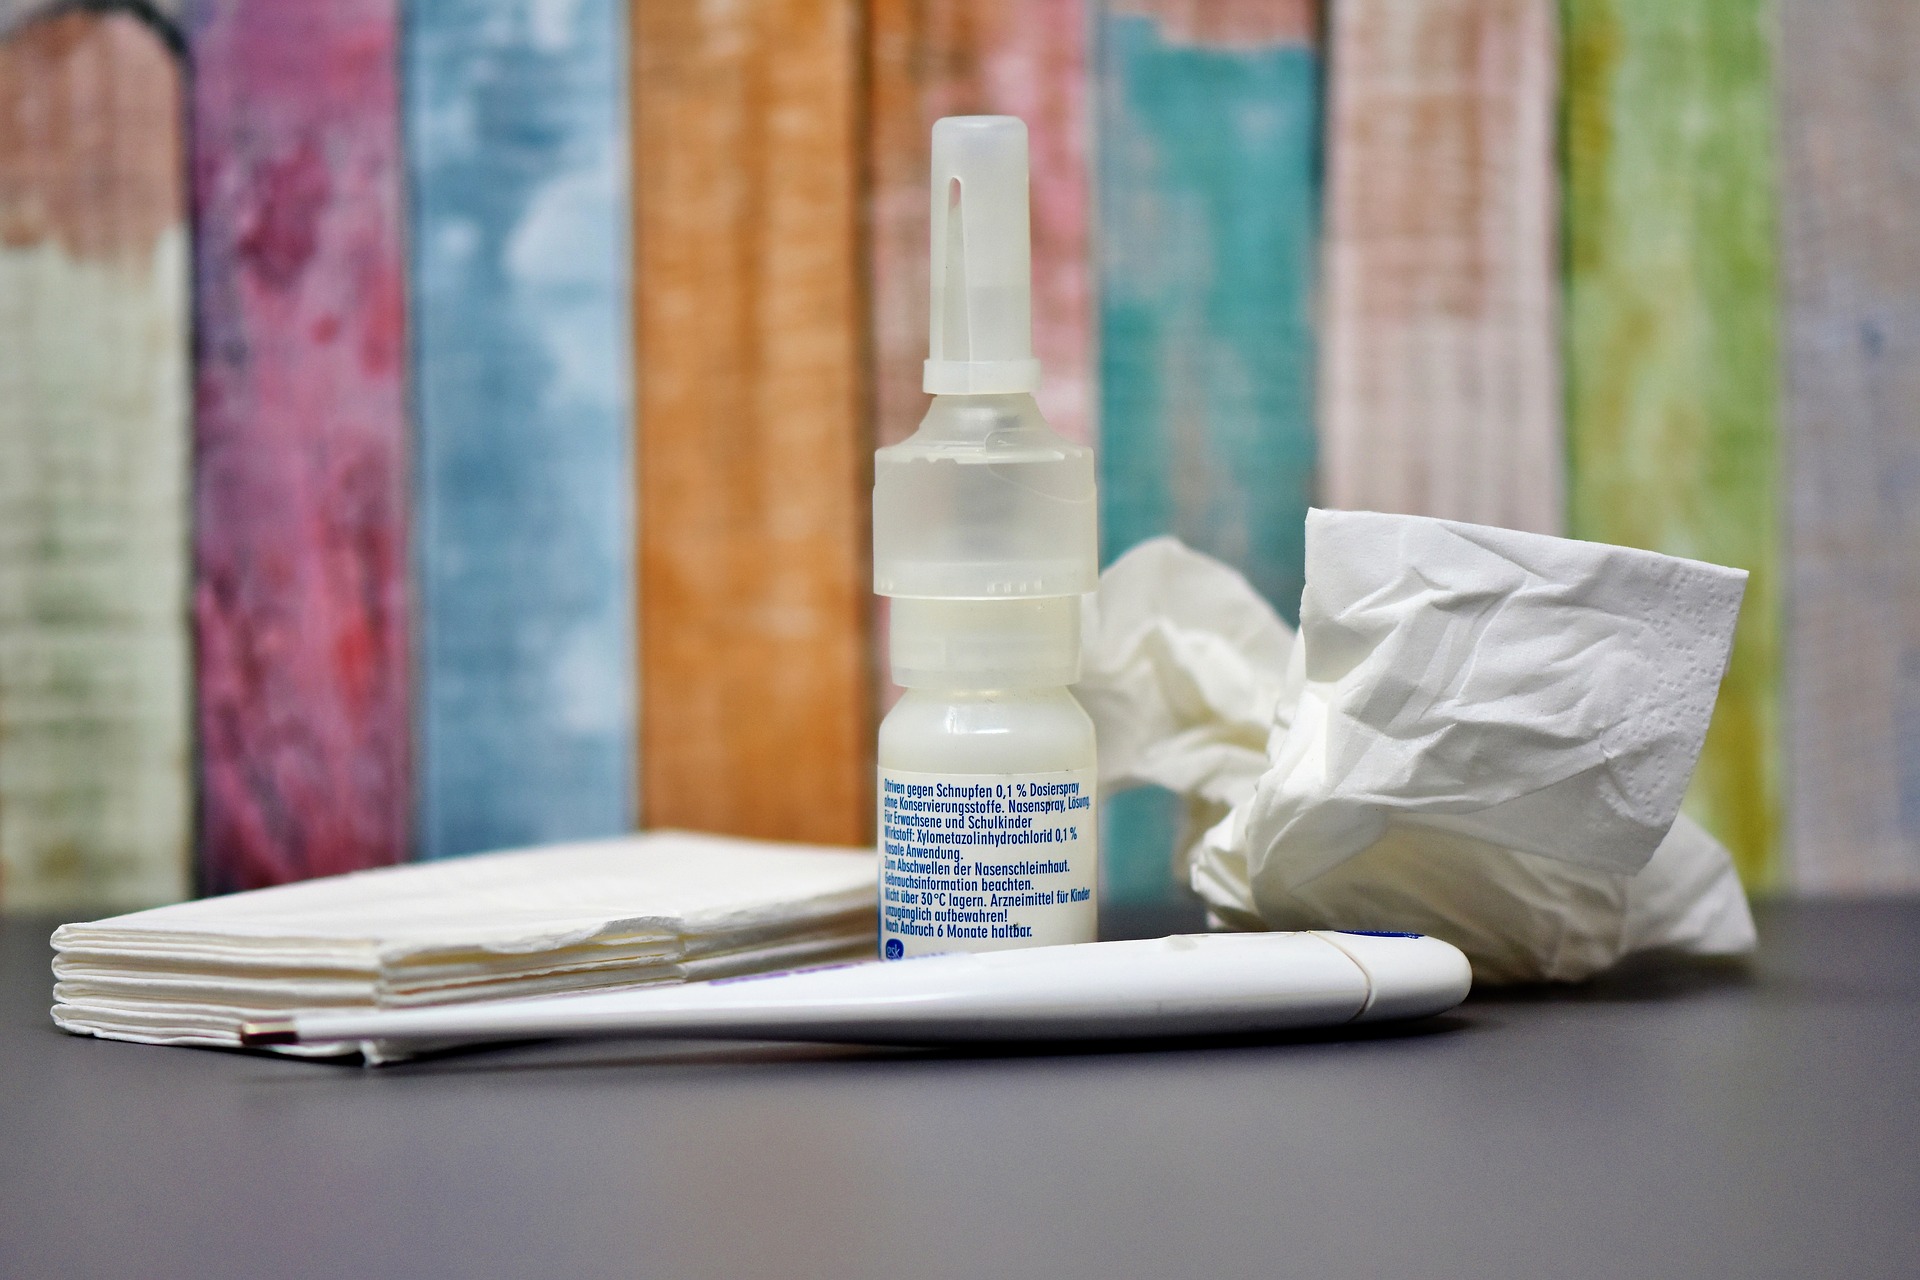 Masks, tissues, thermometer and nasal spray (source: Capri23auto, Pixabay)